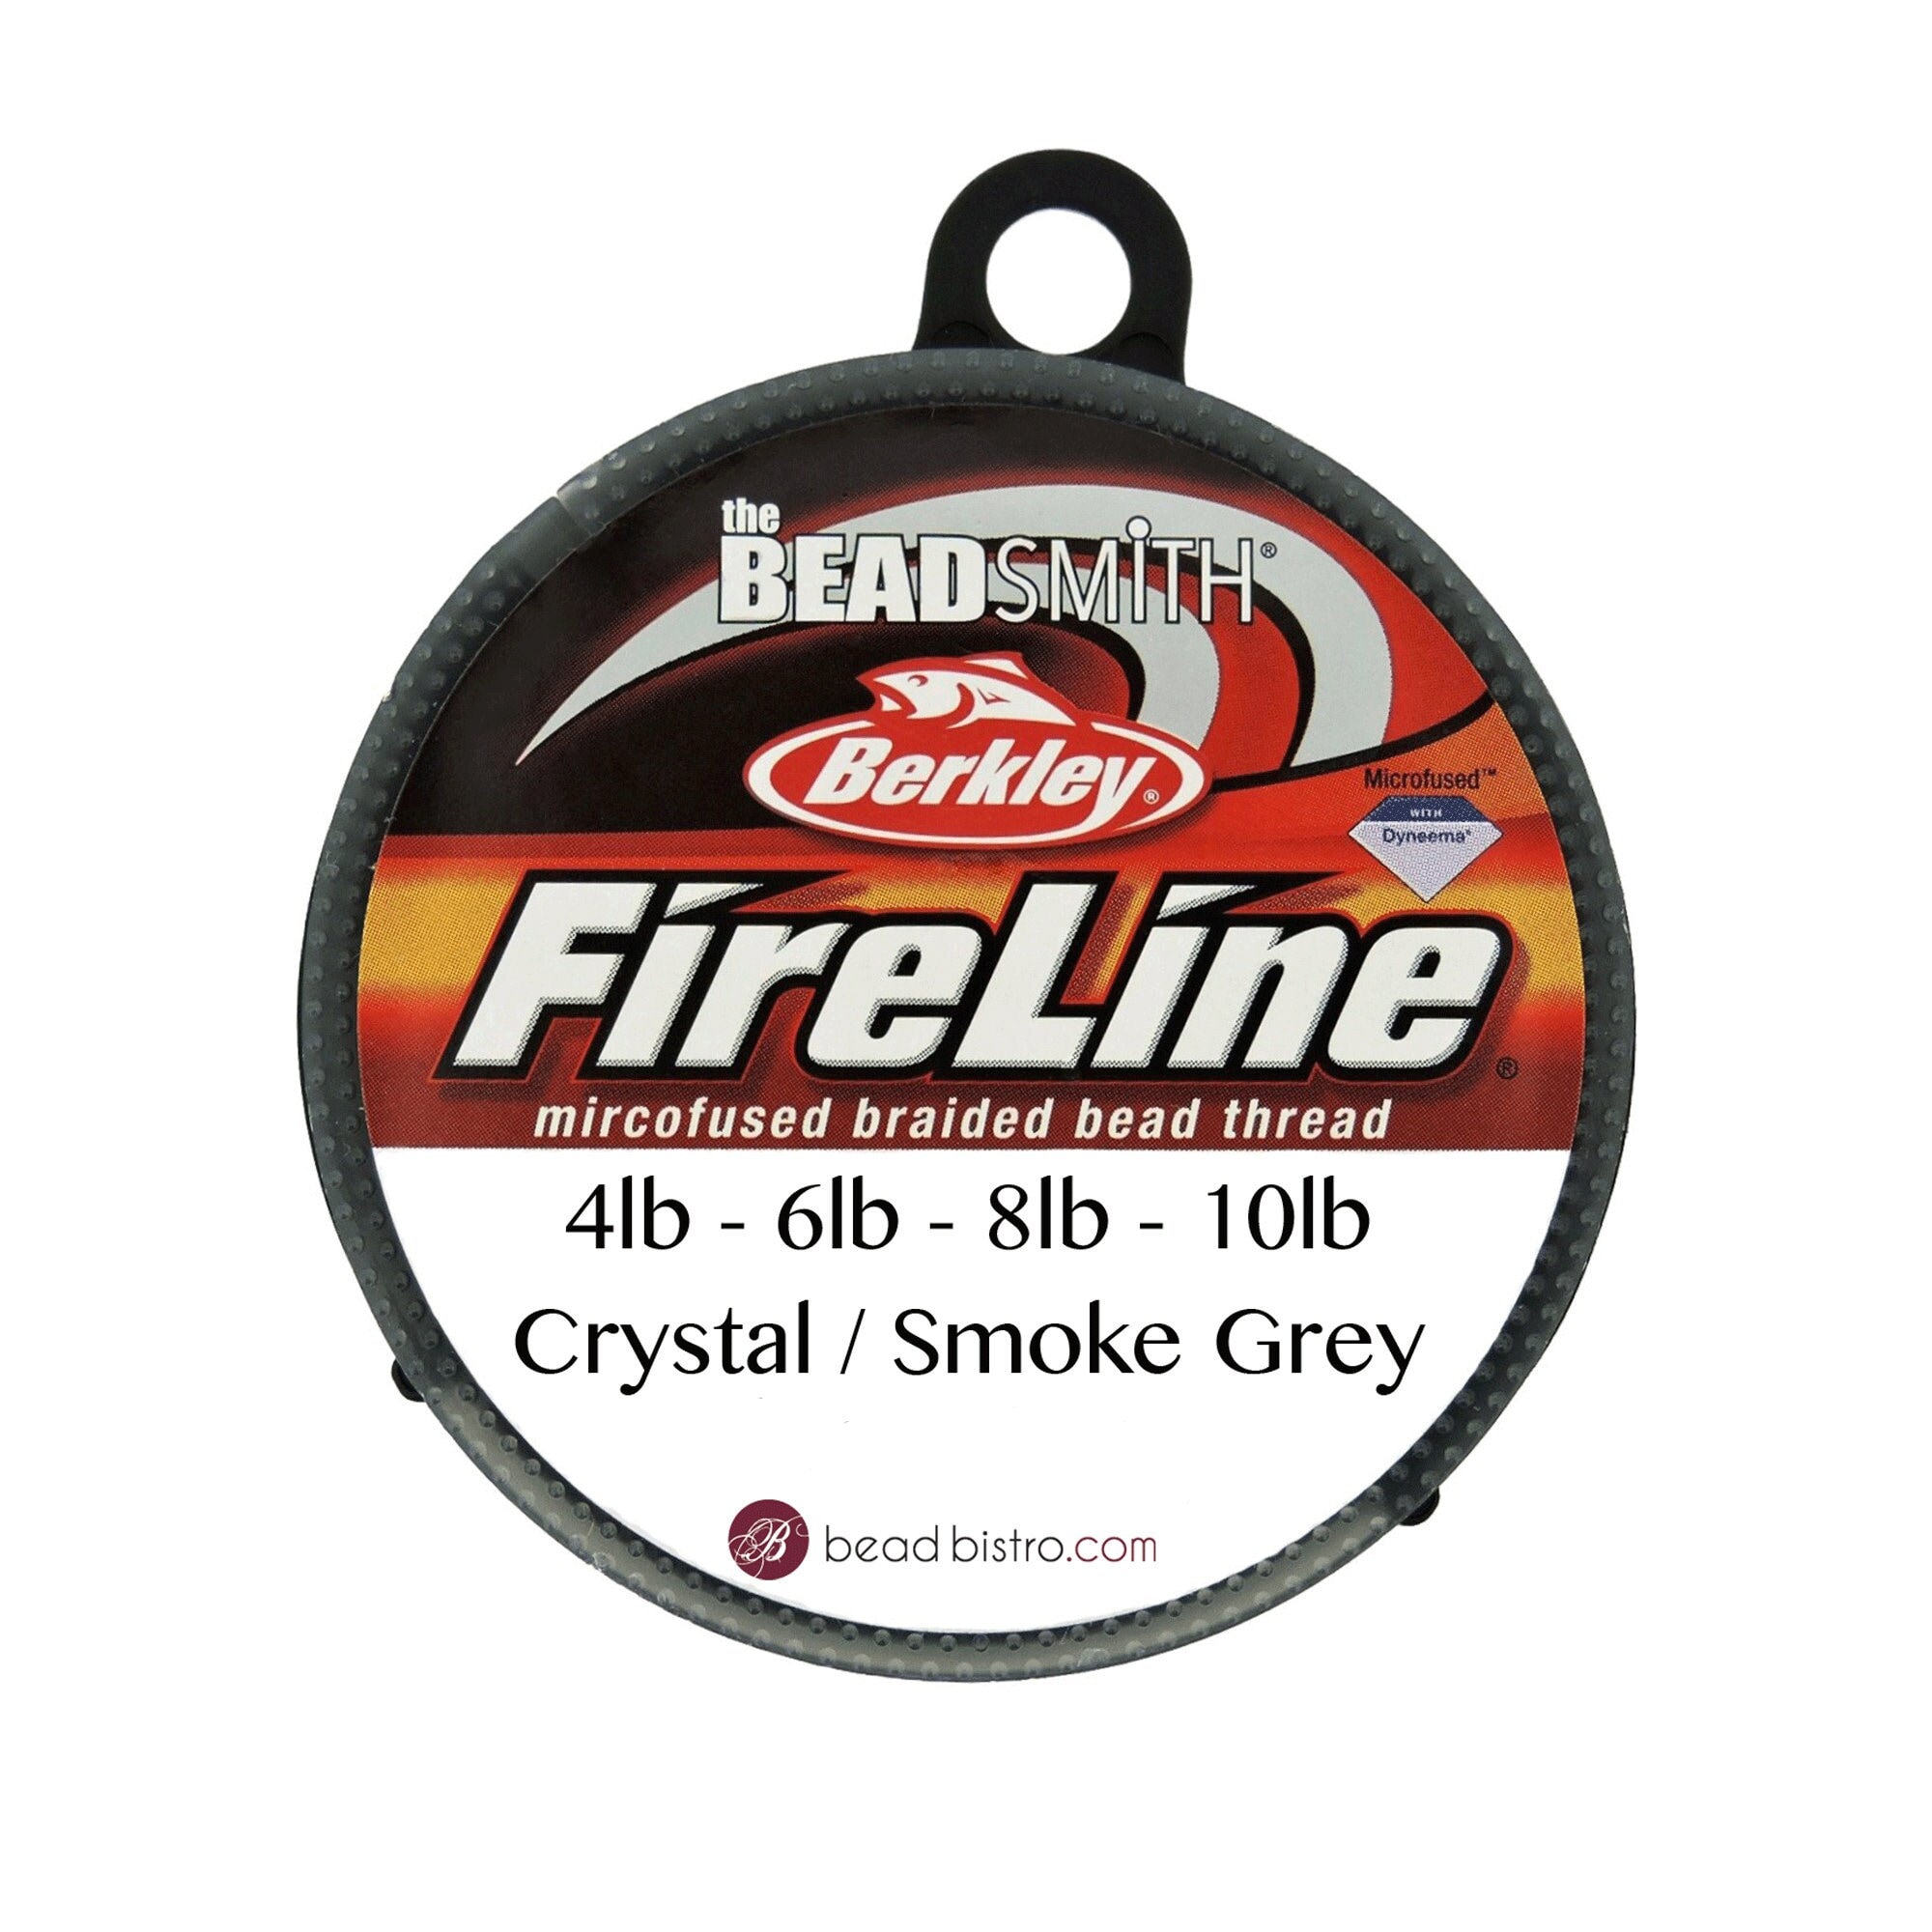 Fireline 4 Lb 